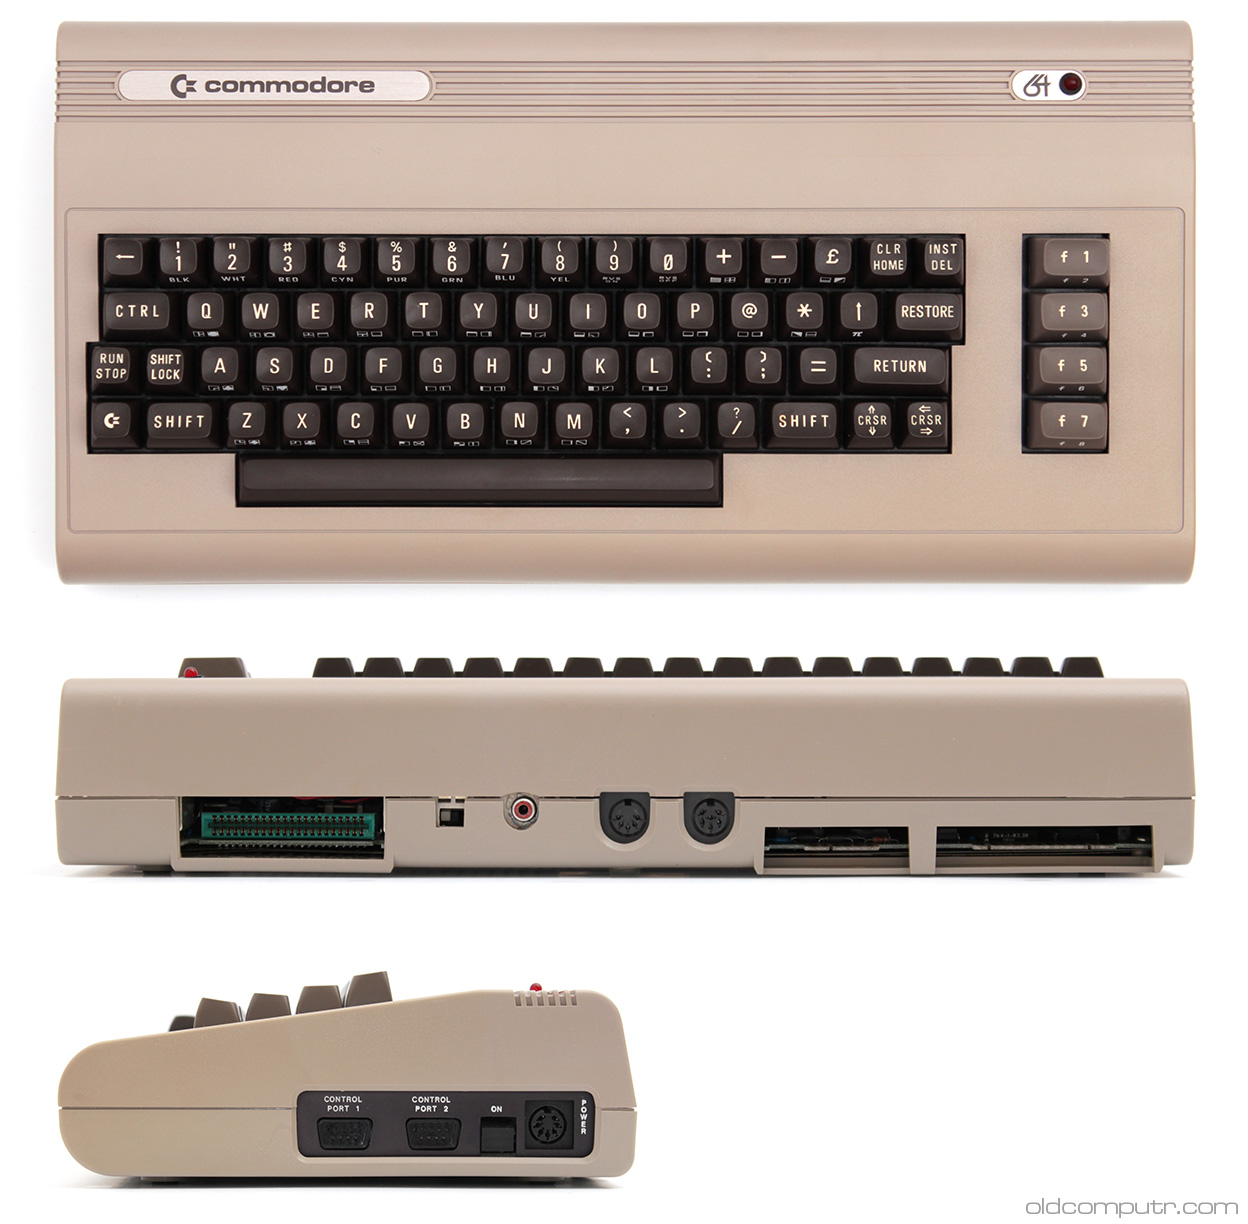 Commodore 64 - views